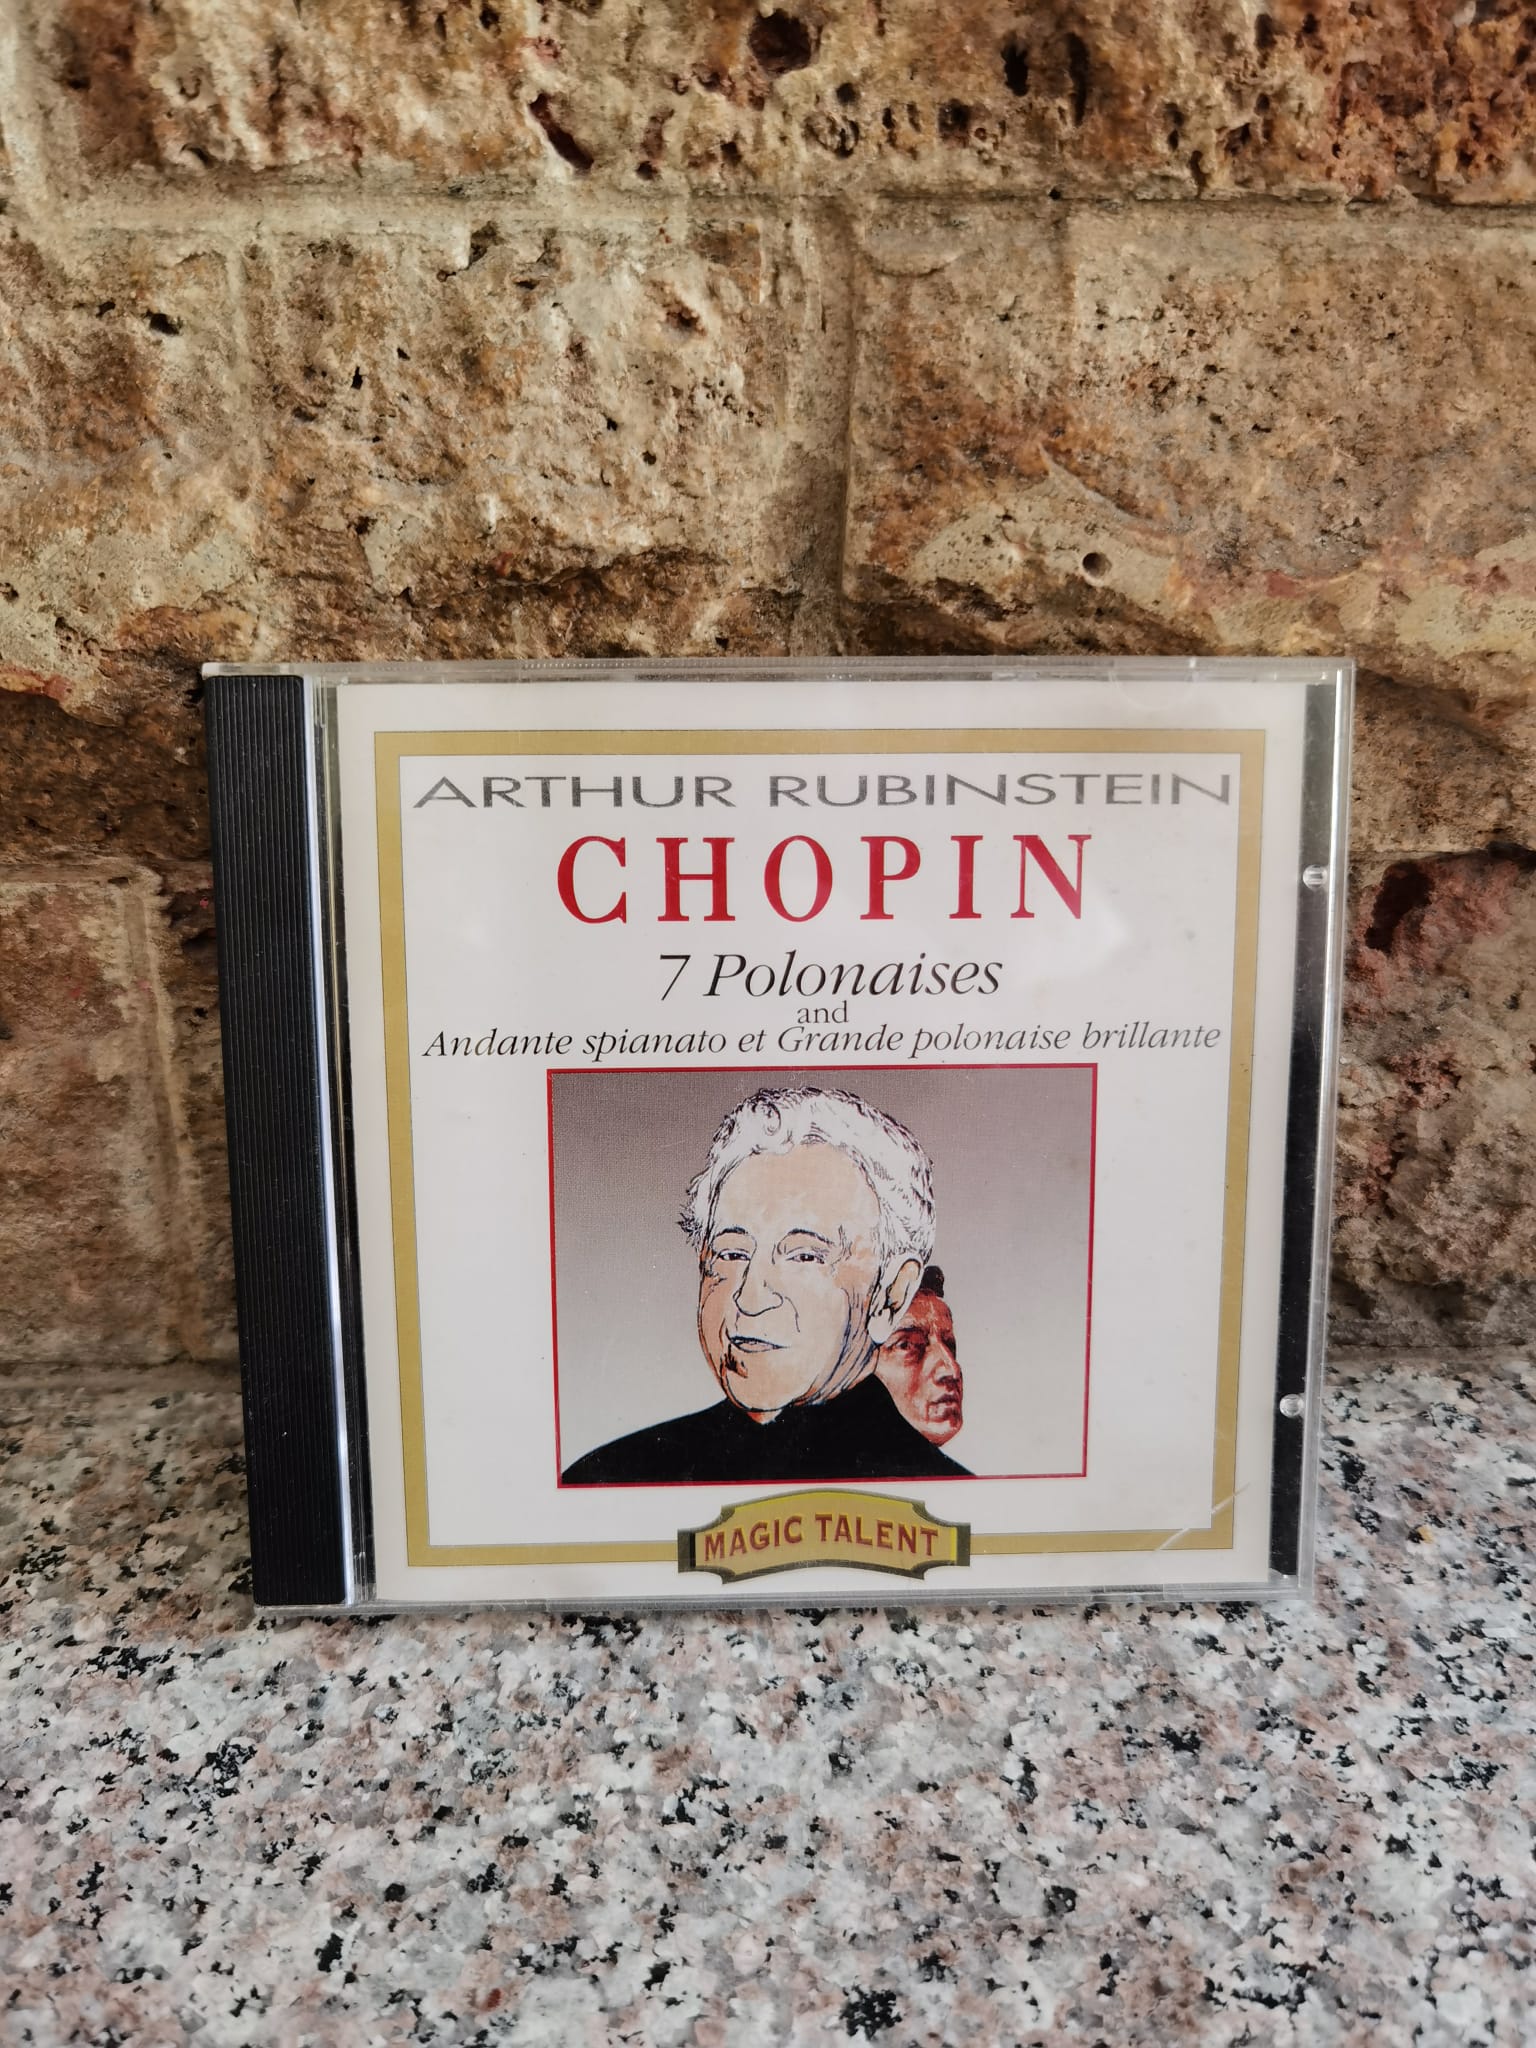 cd arthur rubinstein,chopin – 7 polonaises and andante spianato et grande polonaise brillant         arthur rubinstein,chopin                                                                            